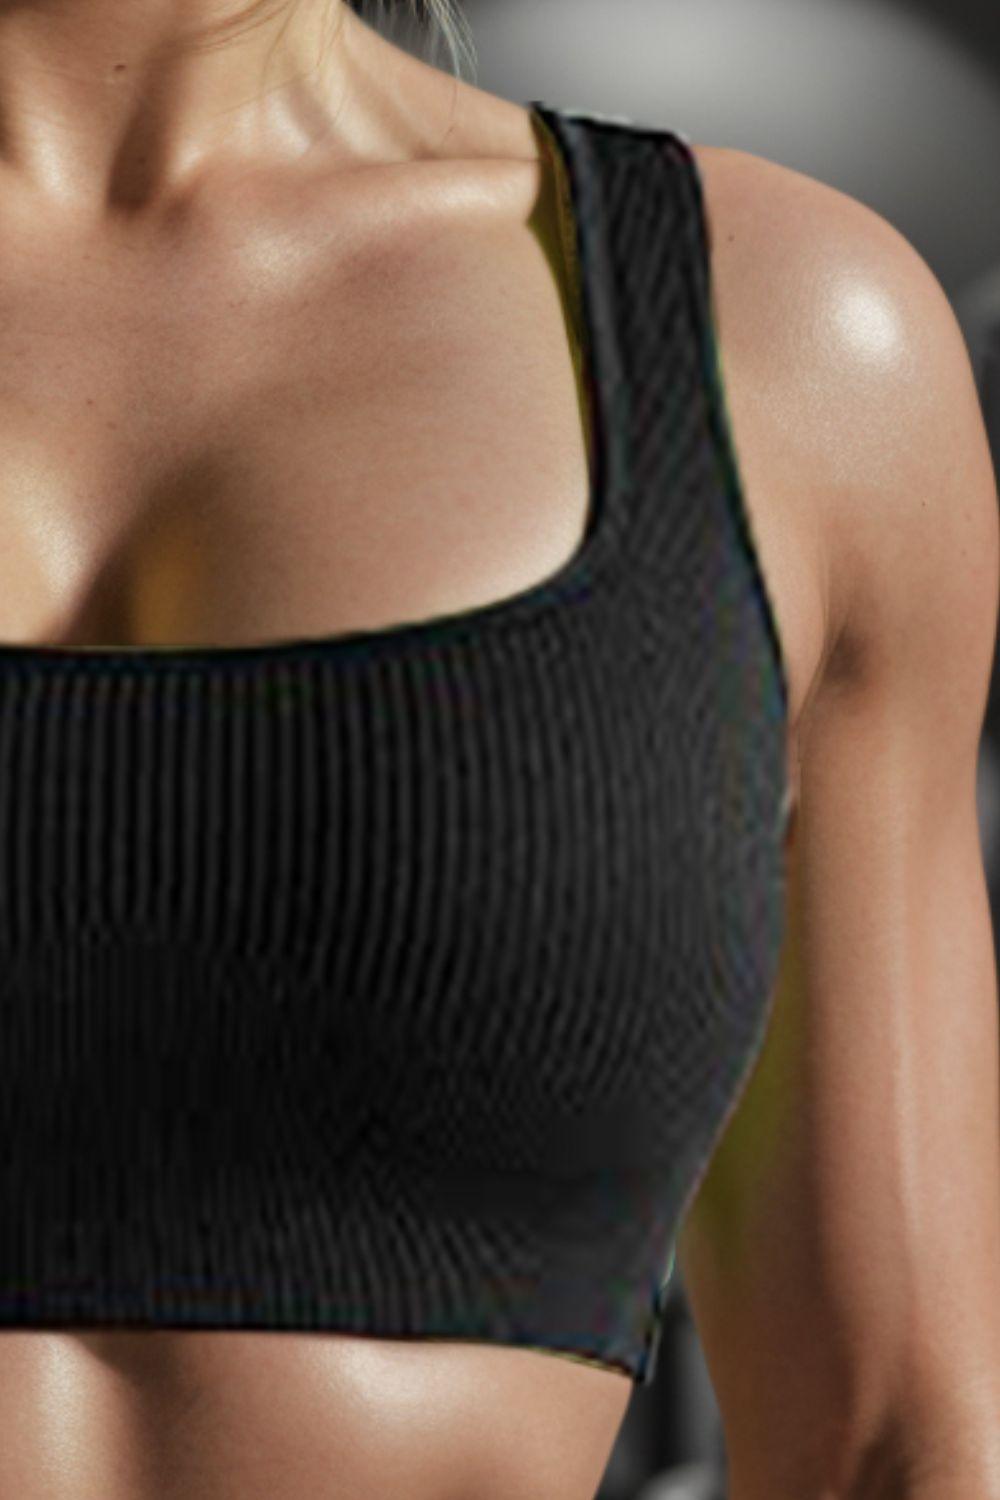 a close up of a woman wearing a sports bra